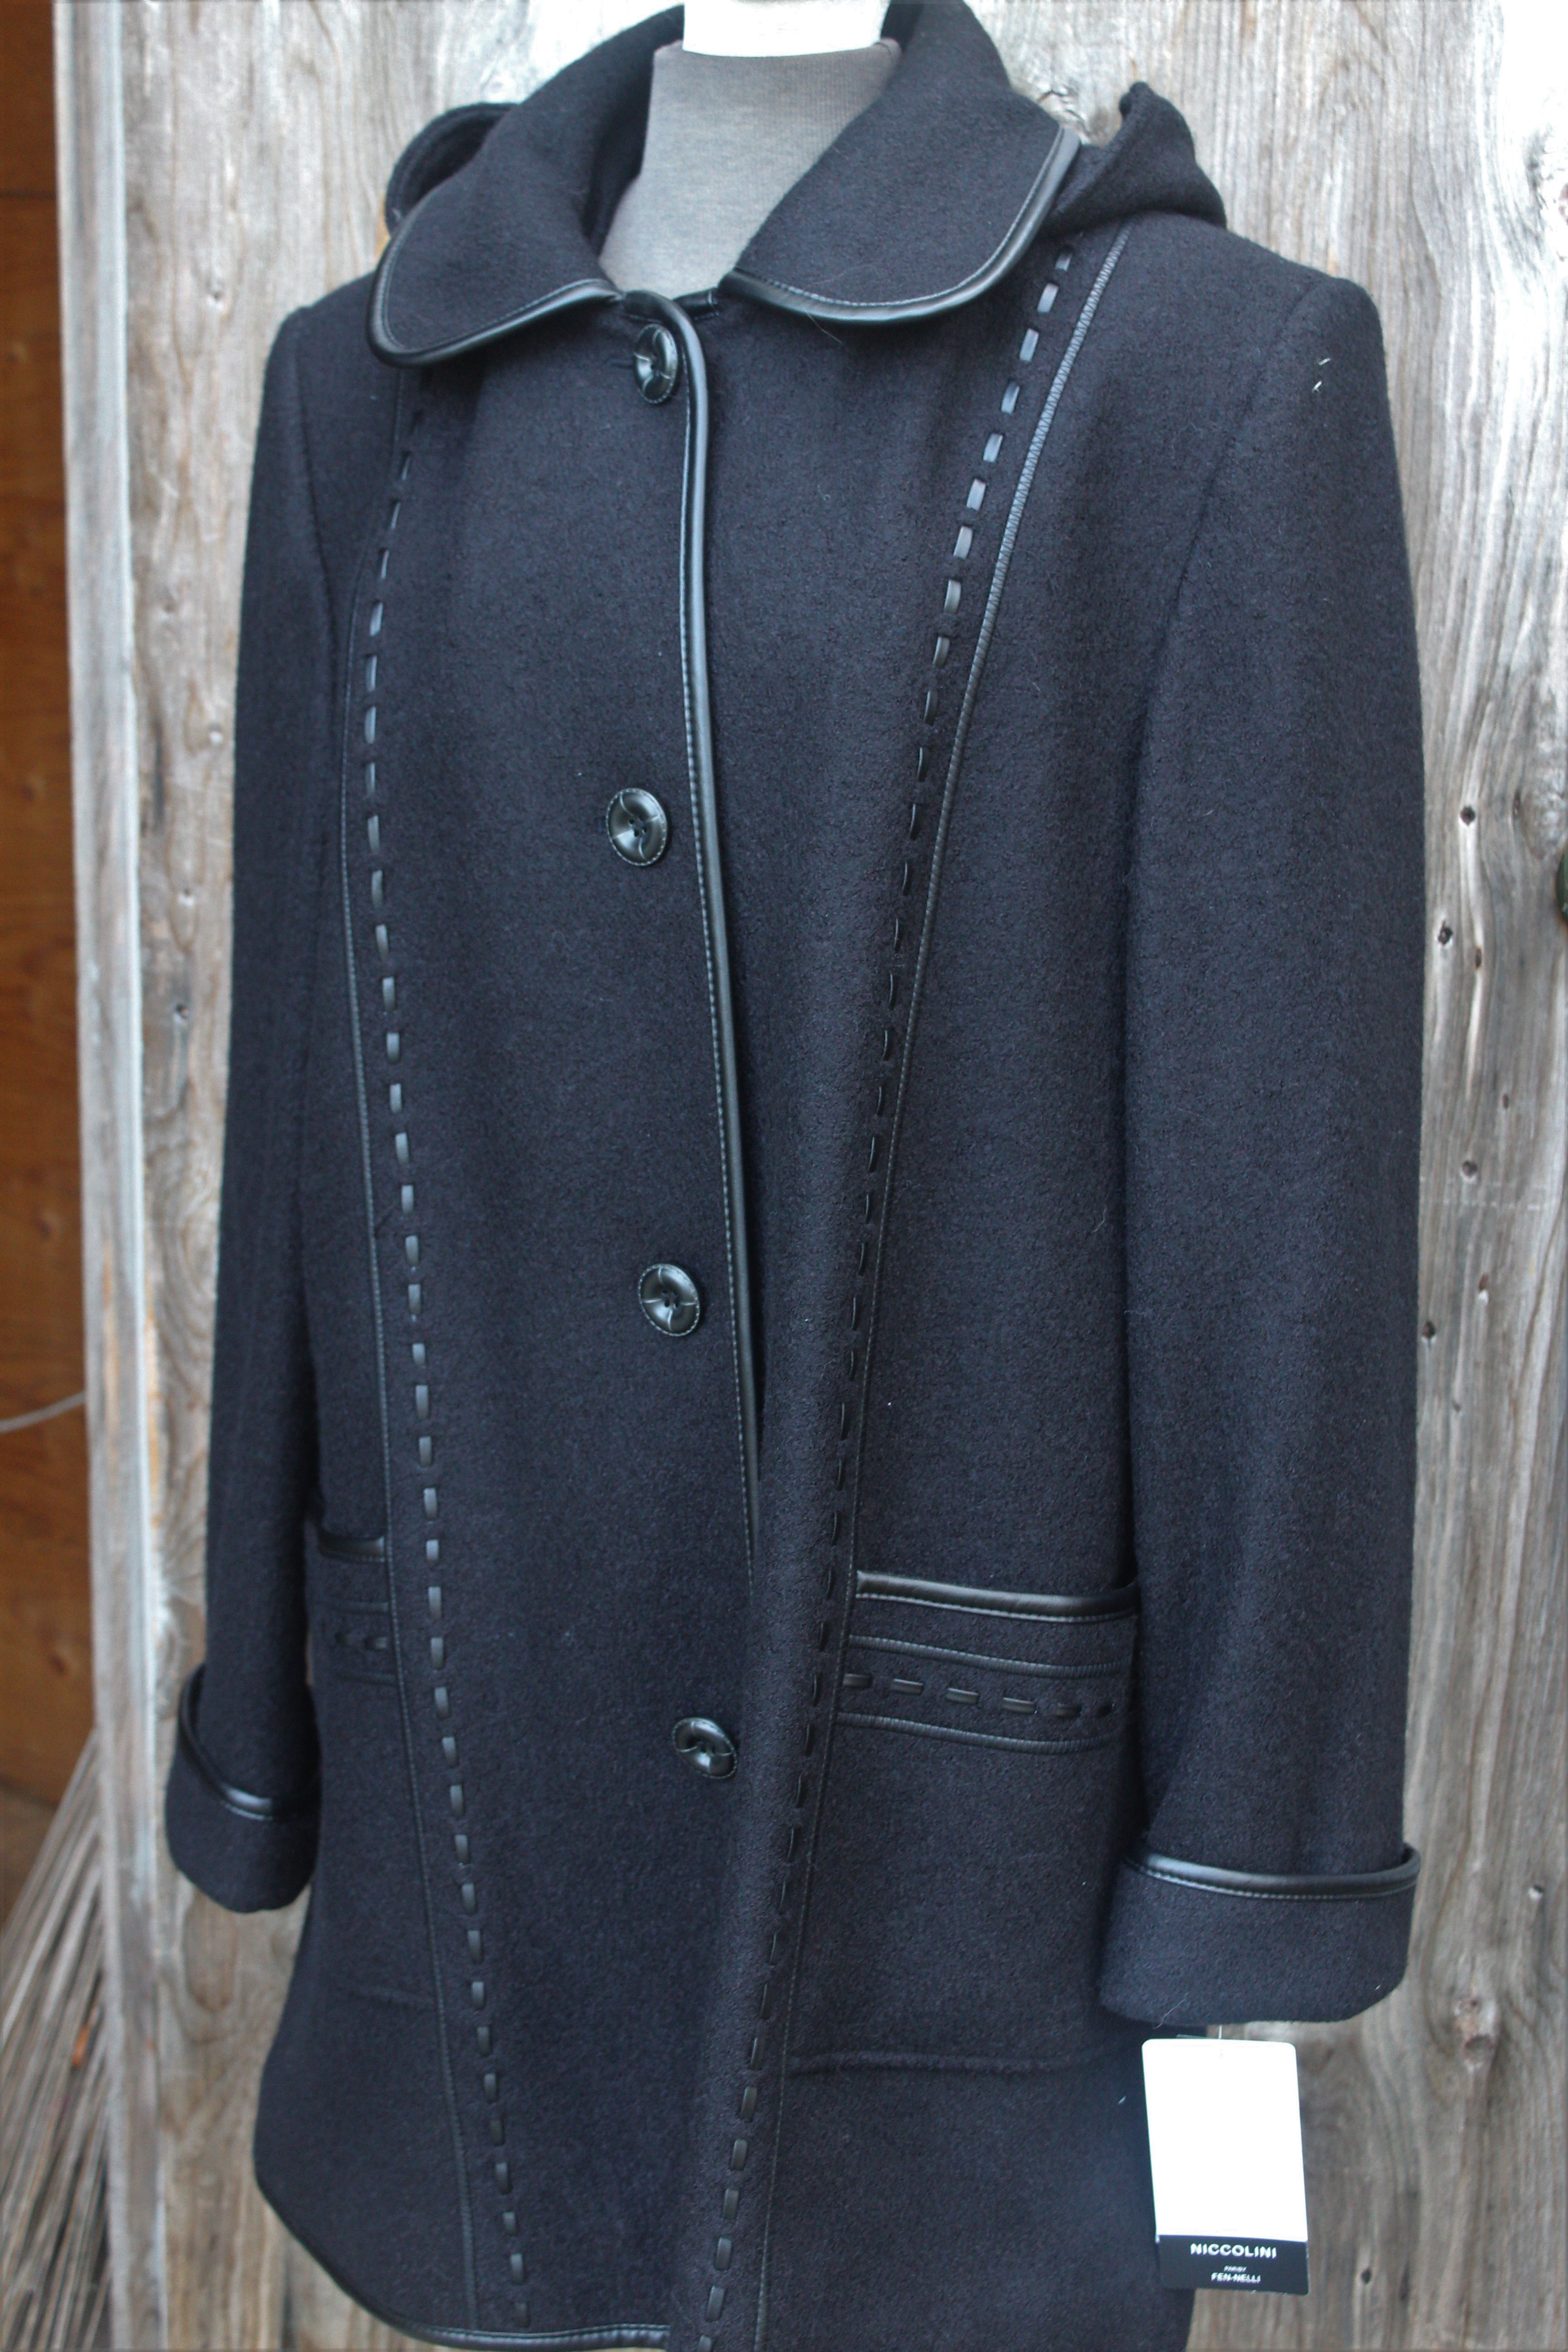 Wool- $240.00
Niccolini: Style #D1779P
